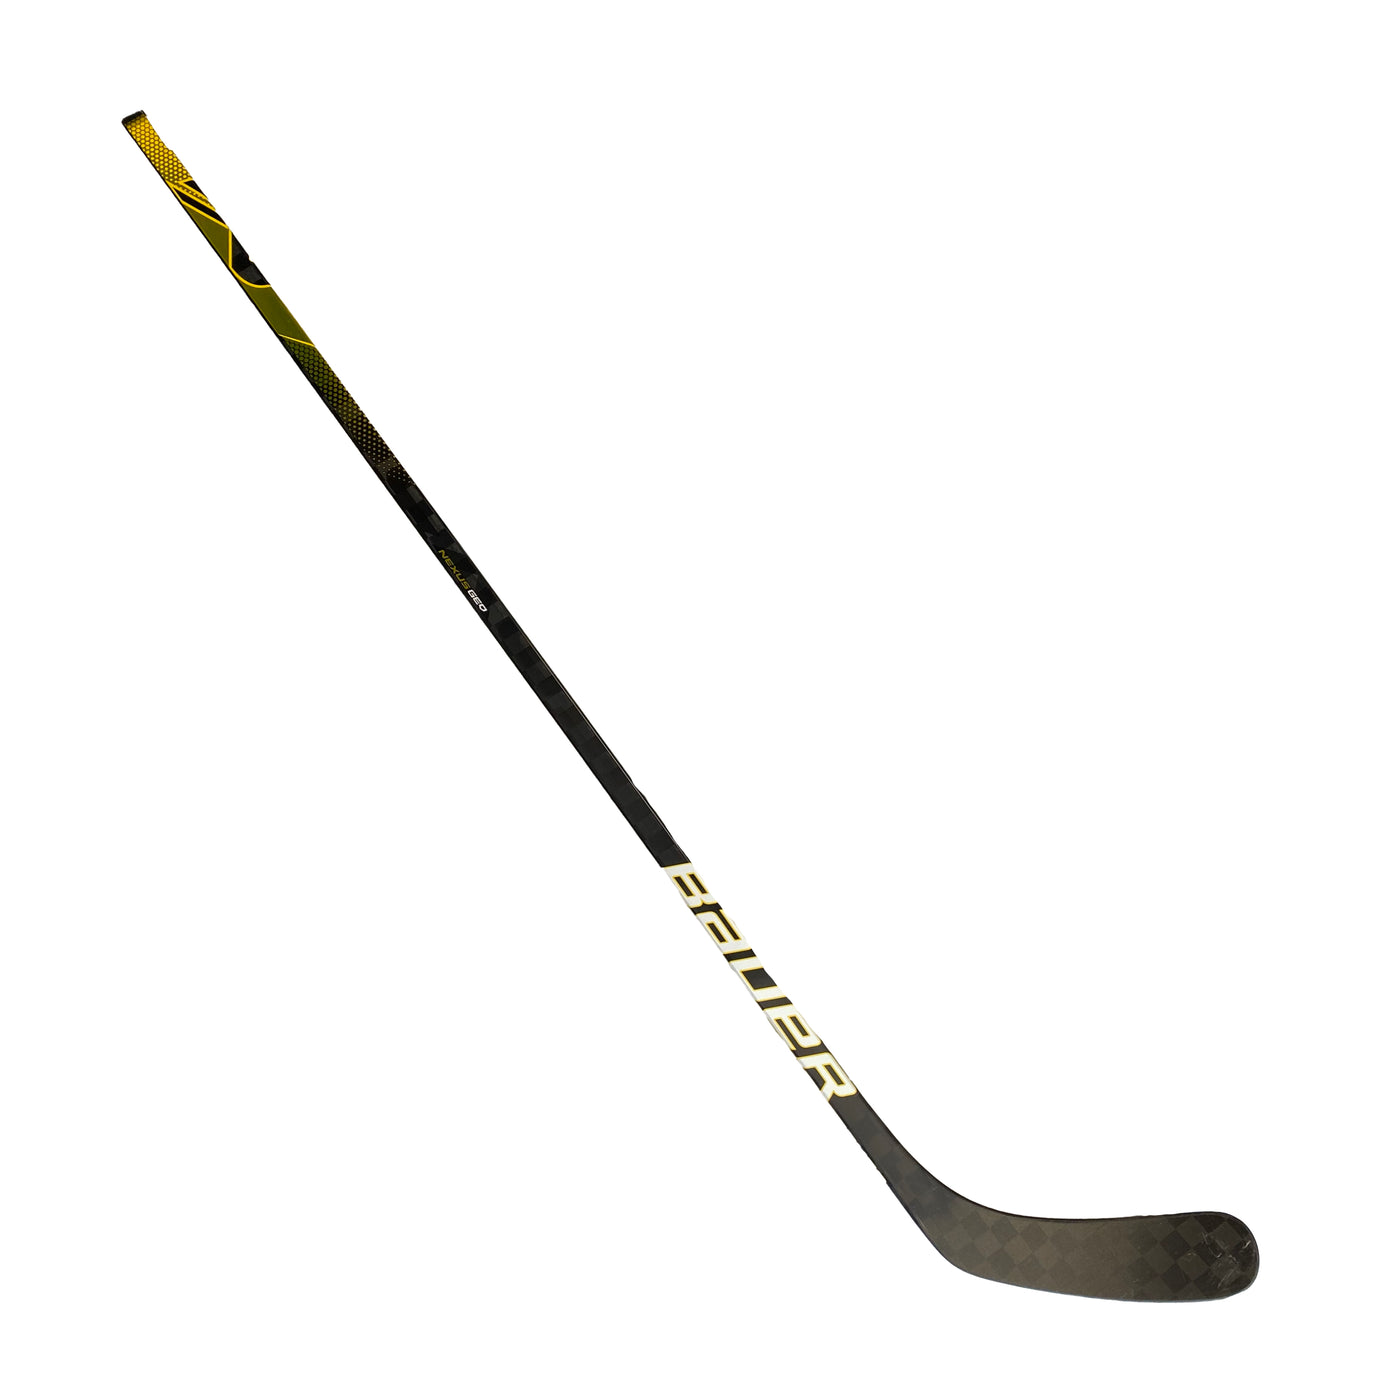 Bauer Nexus Geo - Pittsburgh Penguins - Pro Stock Hockey Stick - Zac Aston-Reese